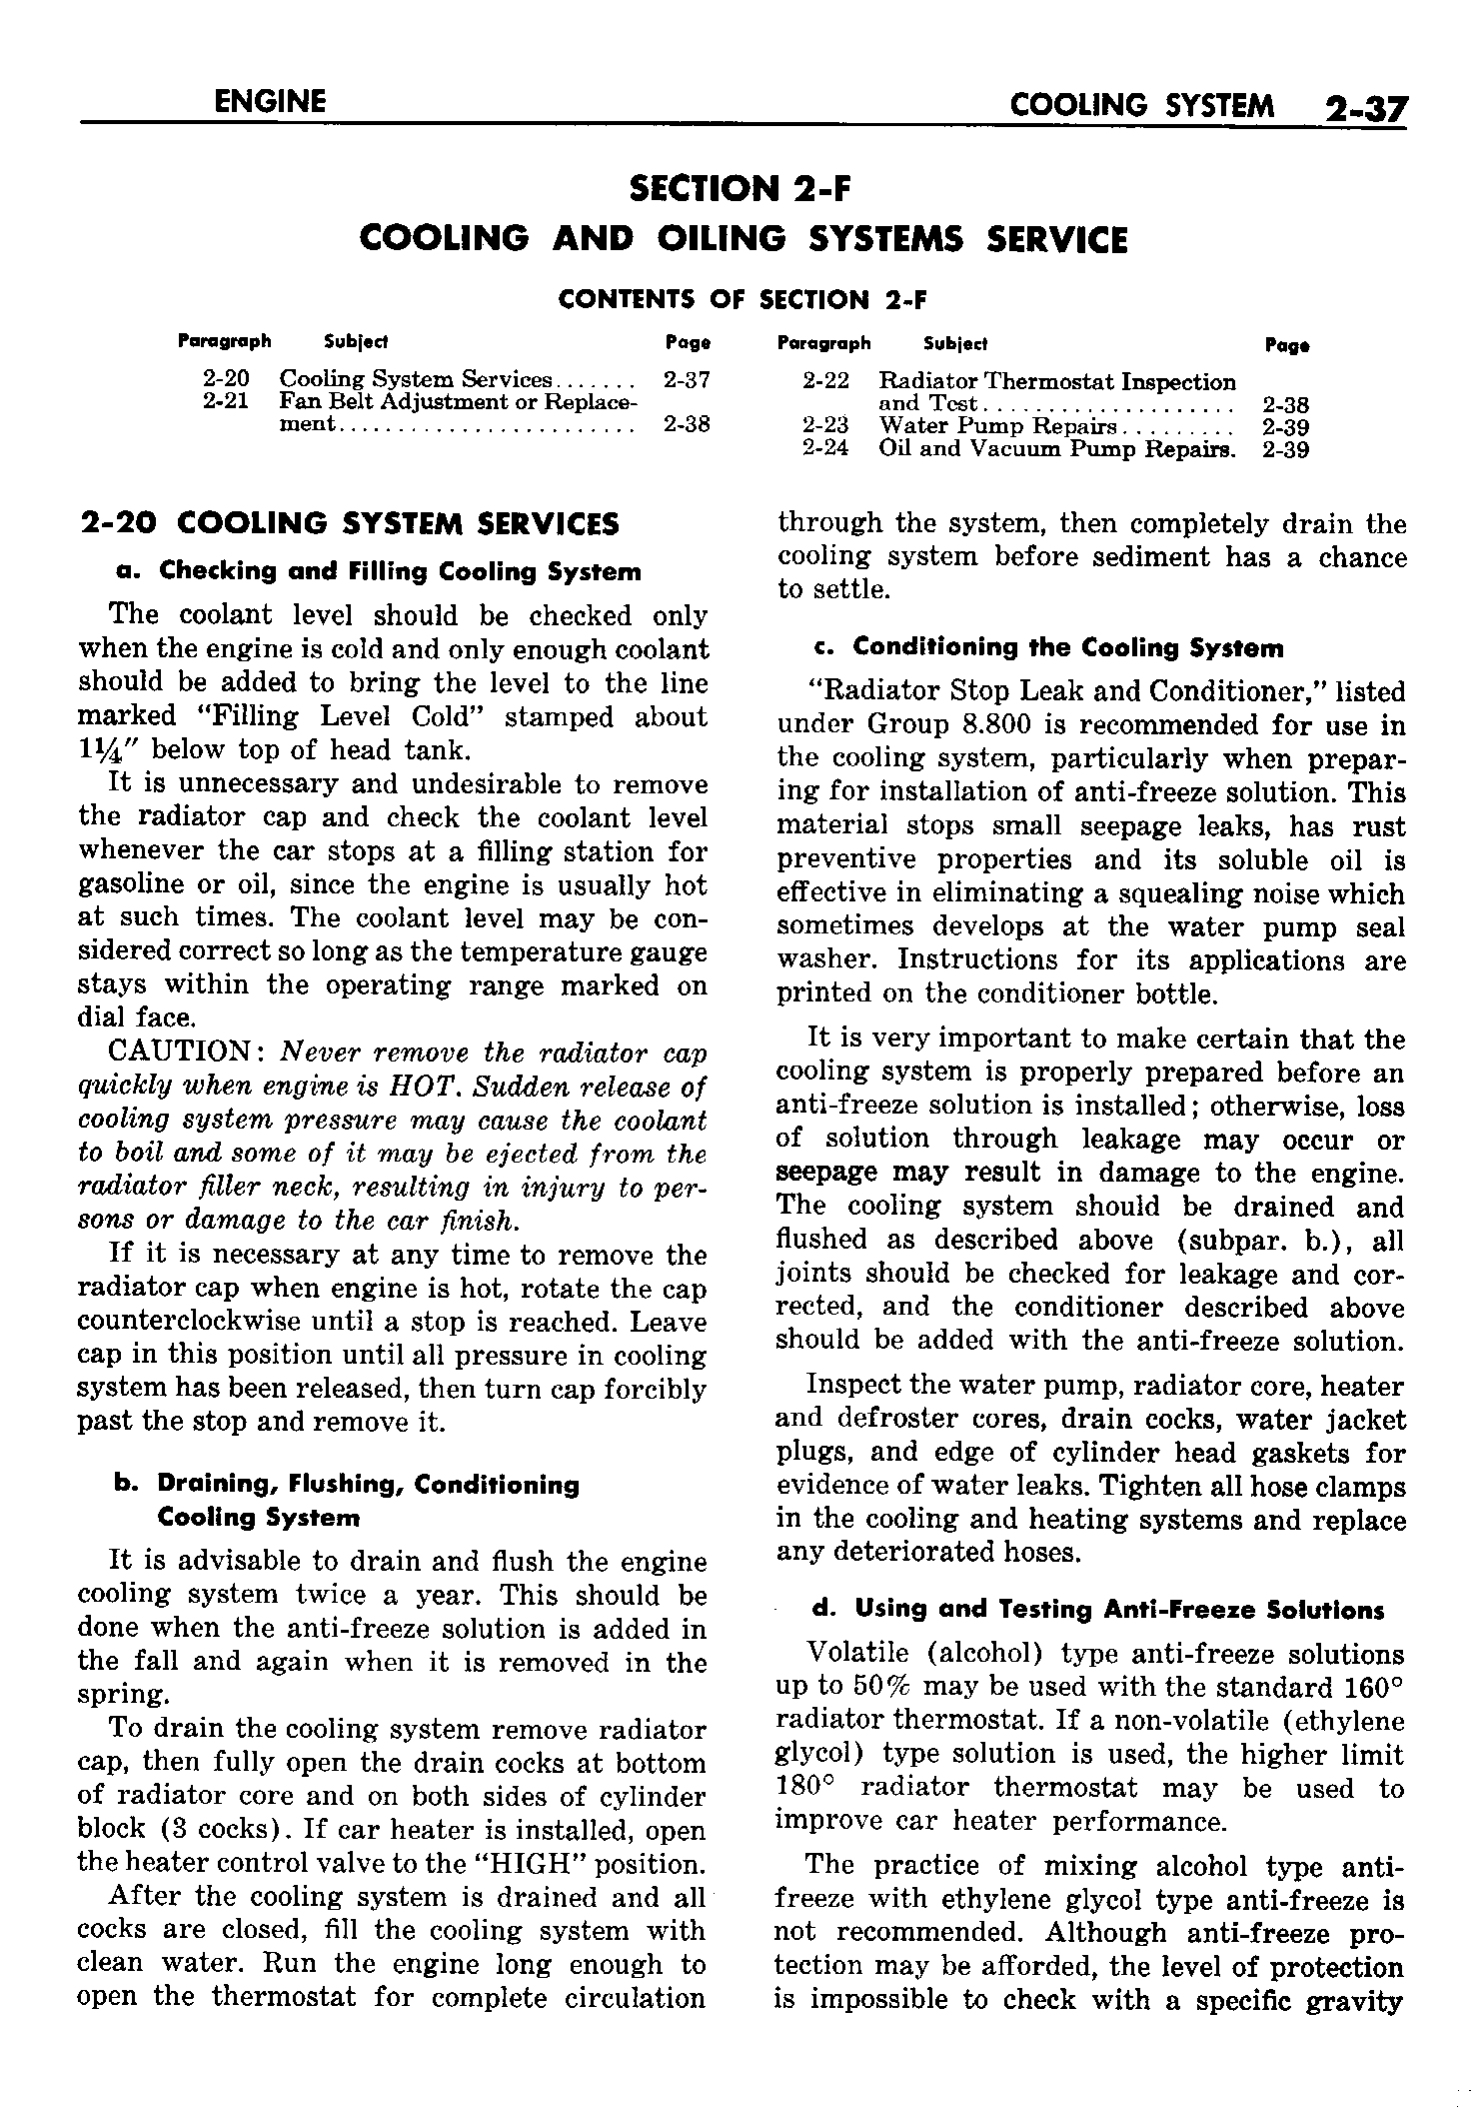 n_03 1958 Buick Shop Manual - Engine_37.jpg